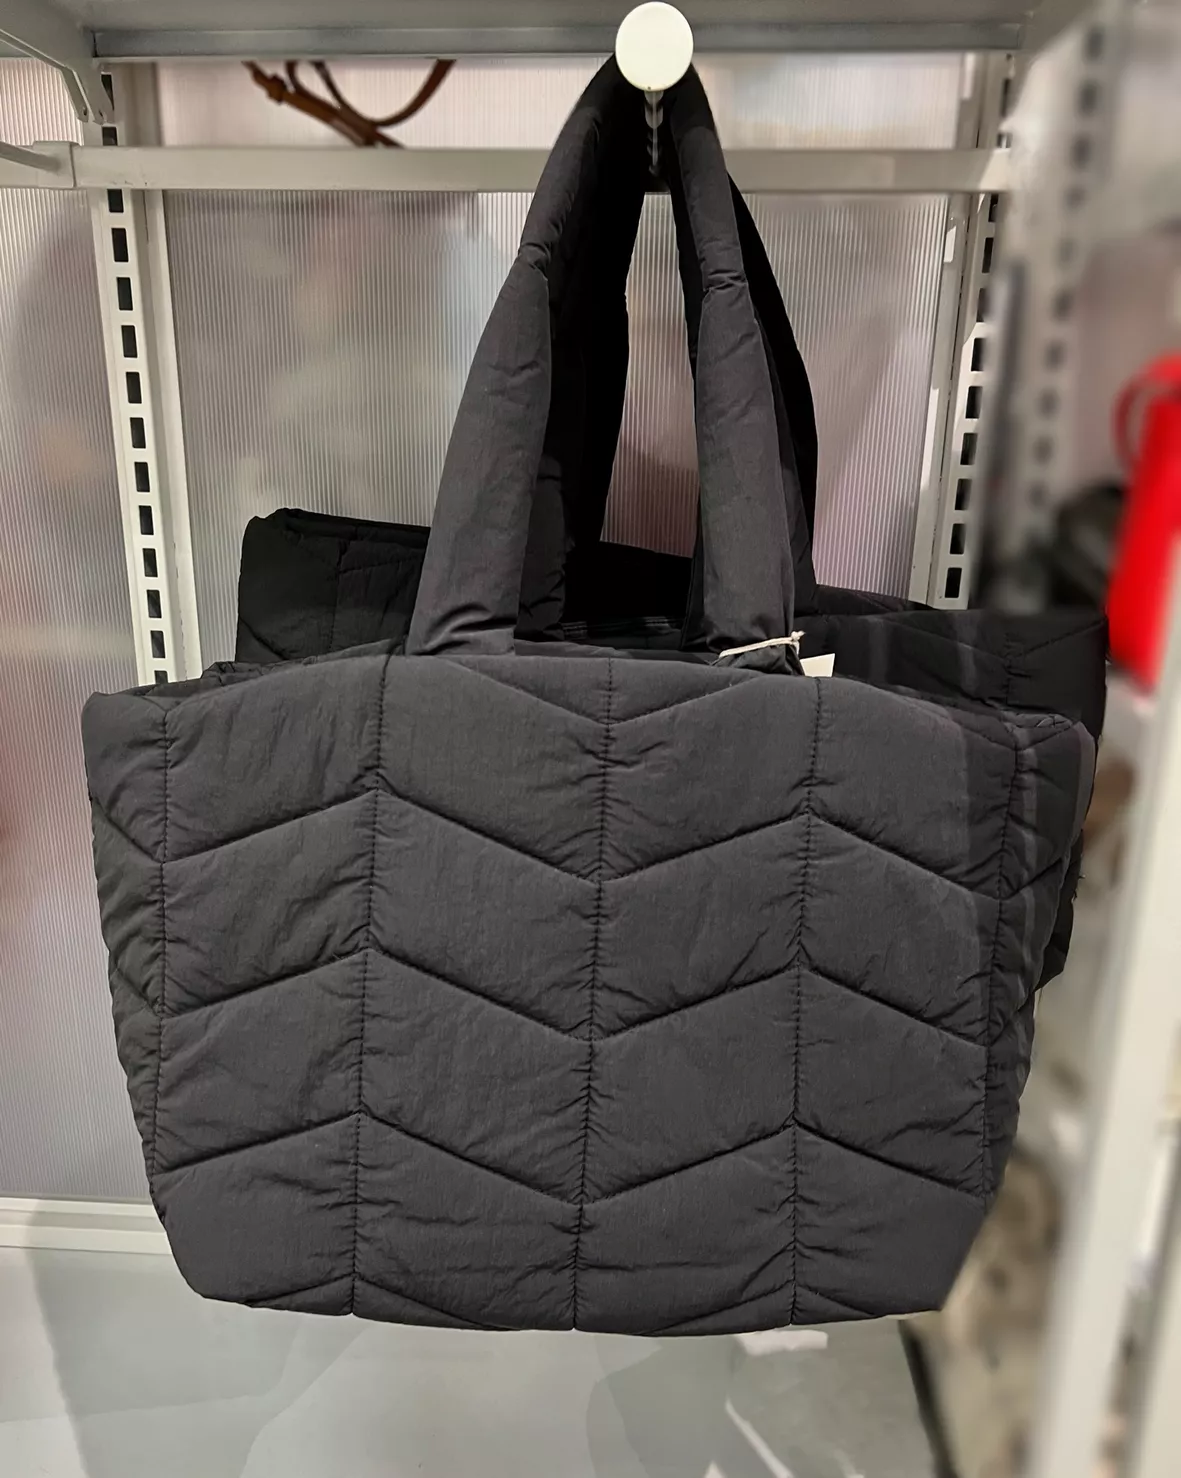 Black Tote Handbag : Target